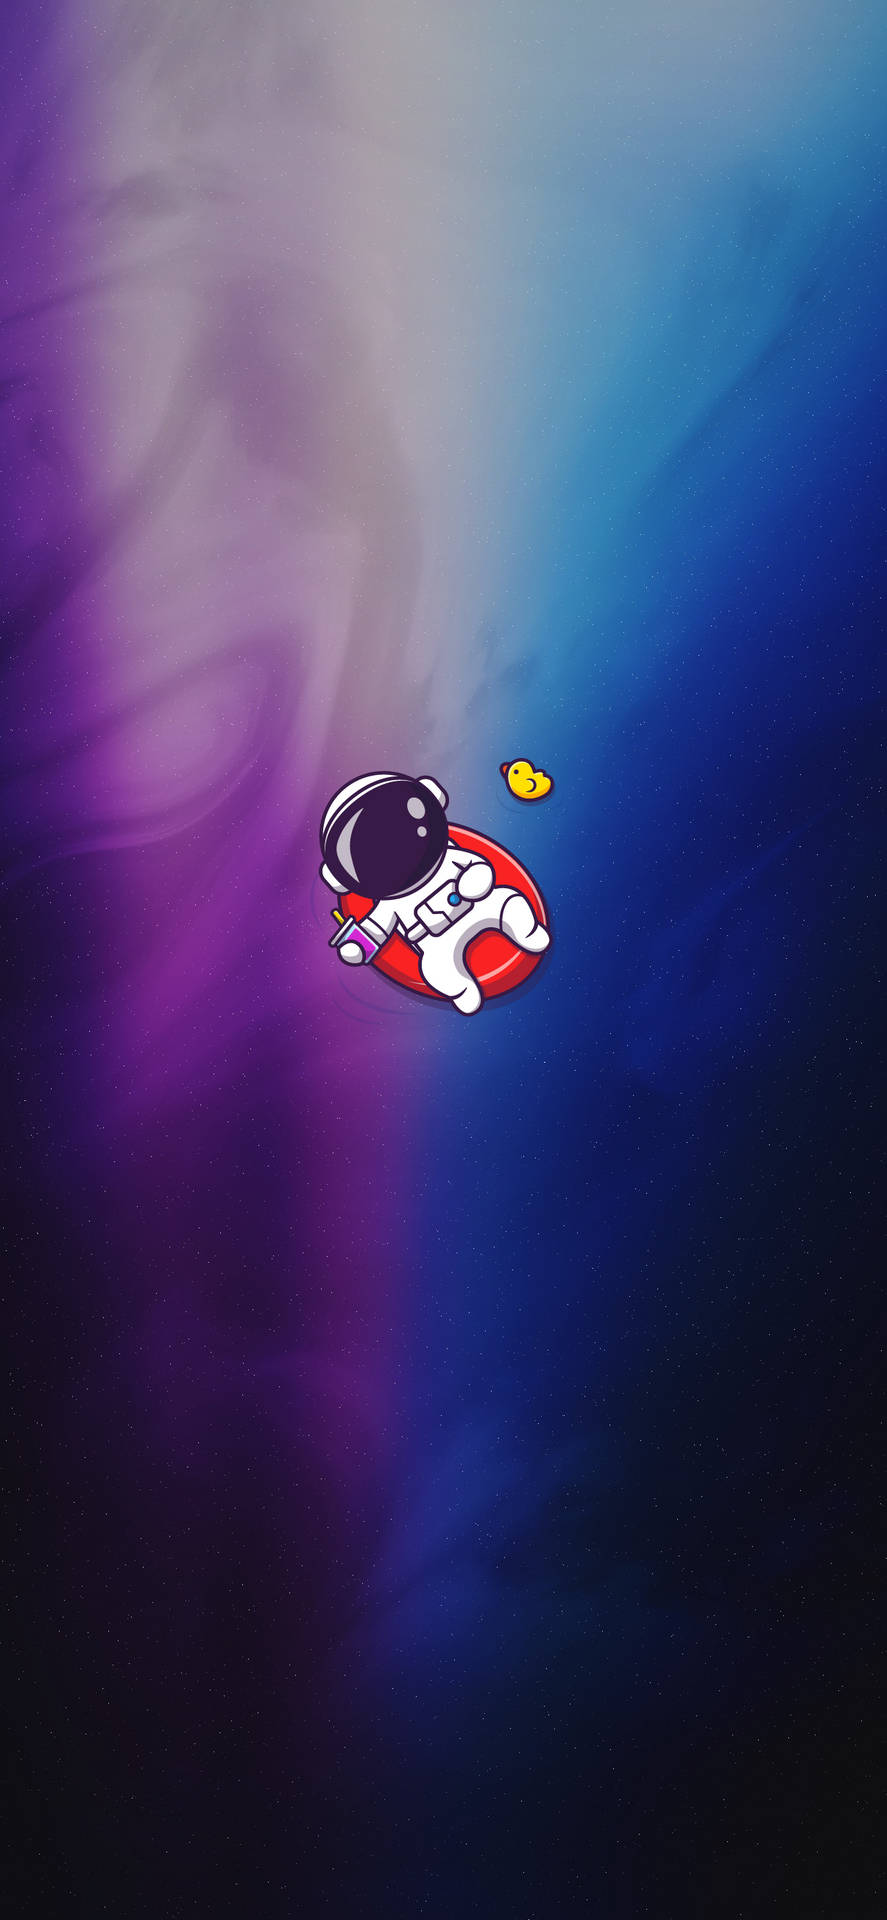 Cartoon Astronaut On A Life Preserver